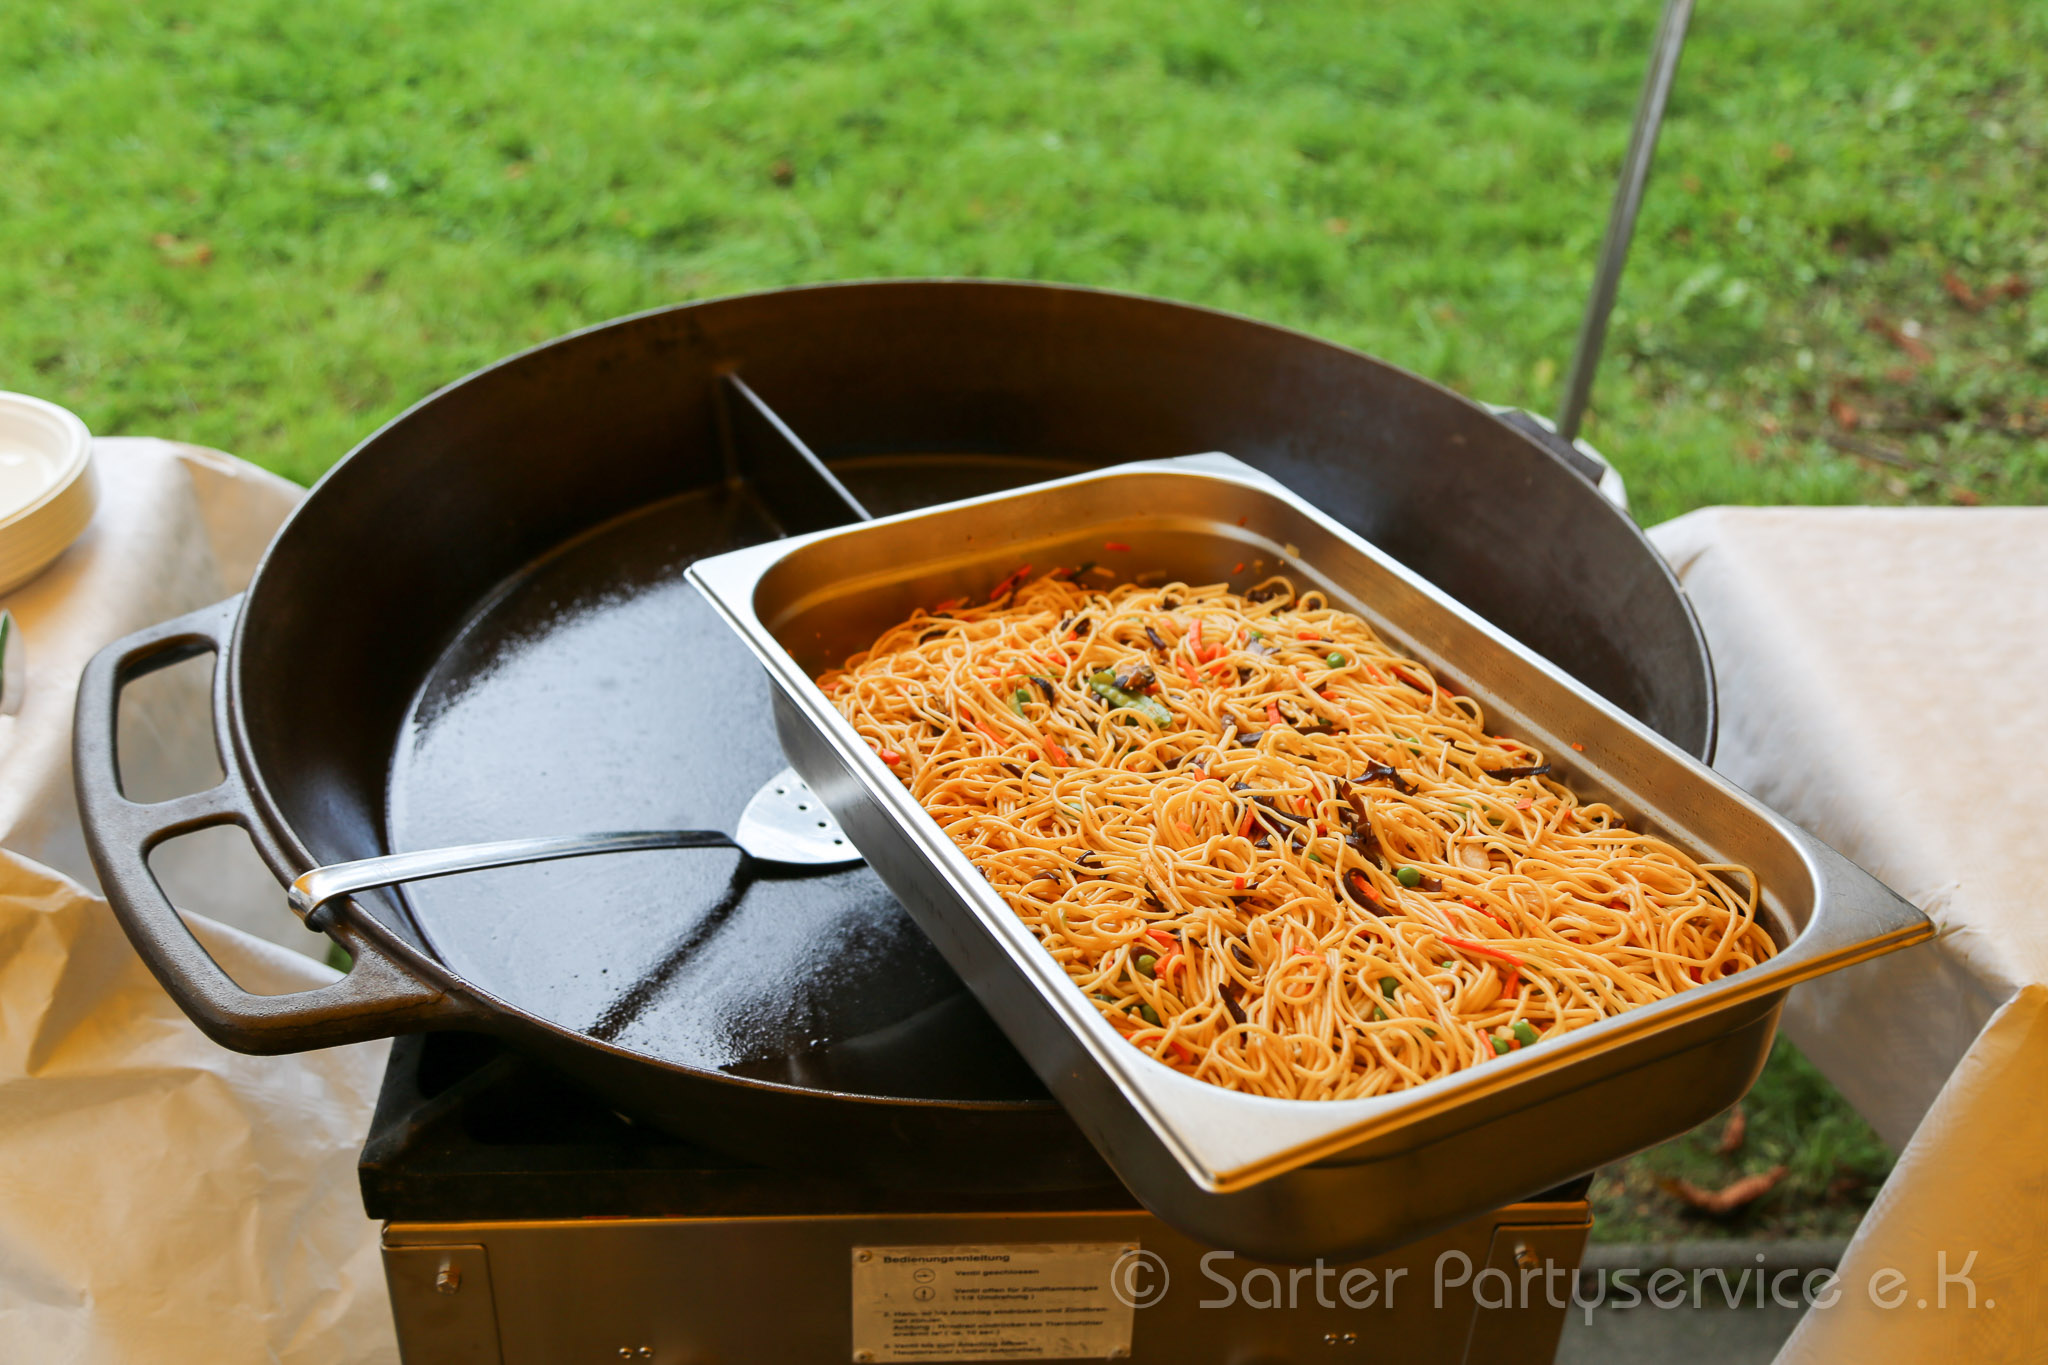 Sarter-Bonn-Catering-02-2090